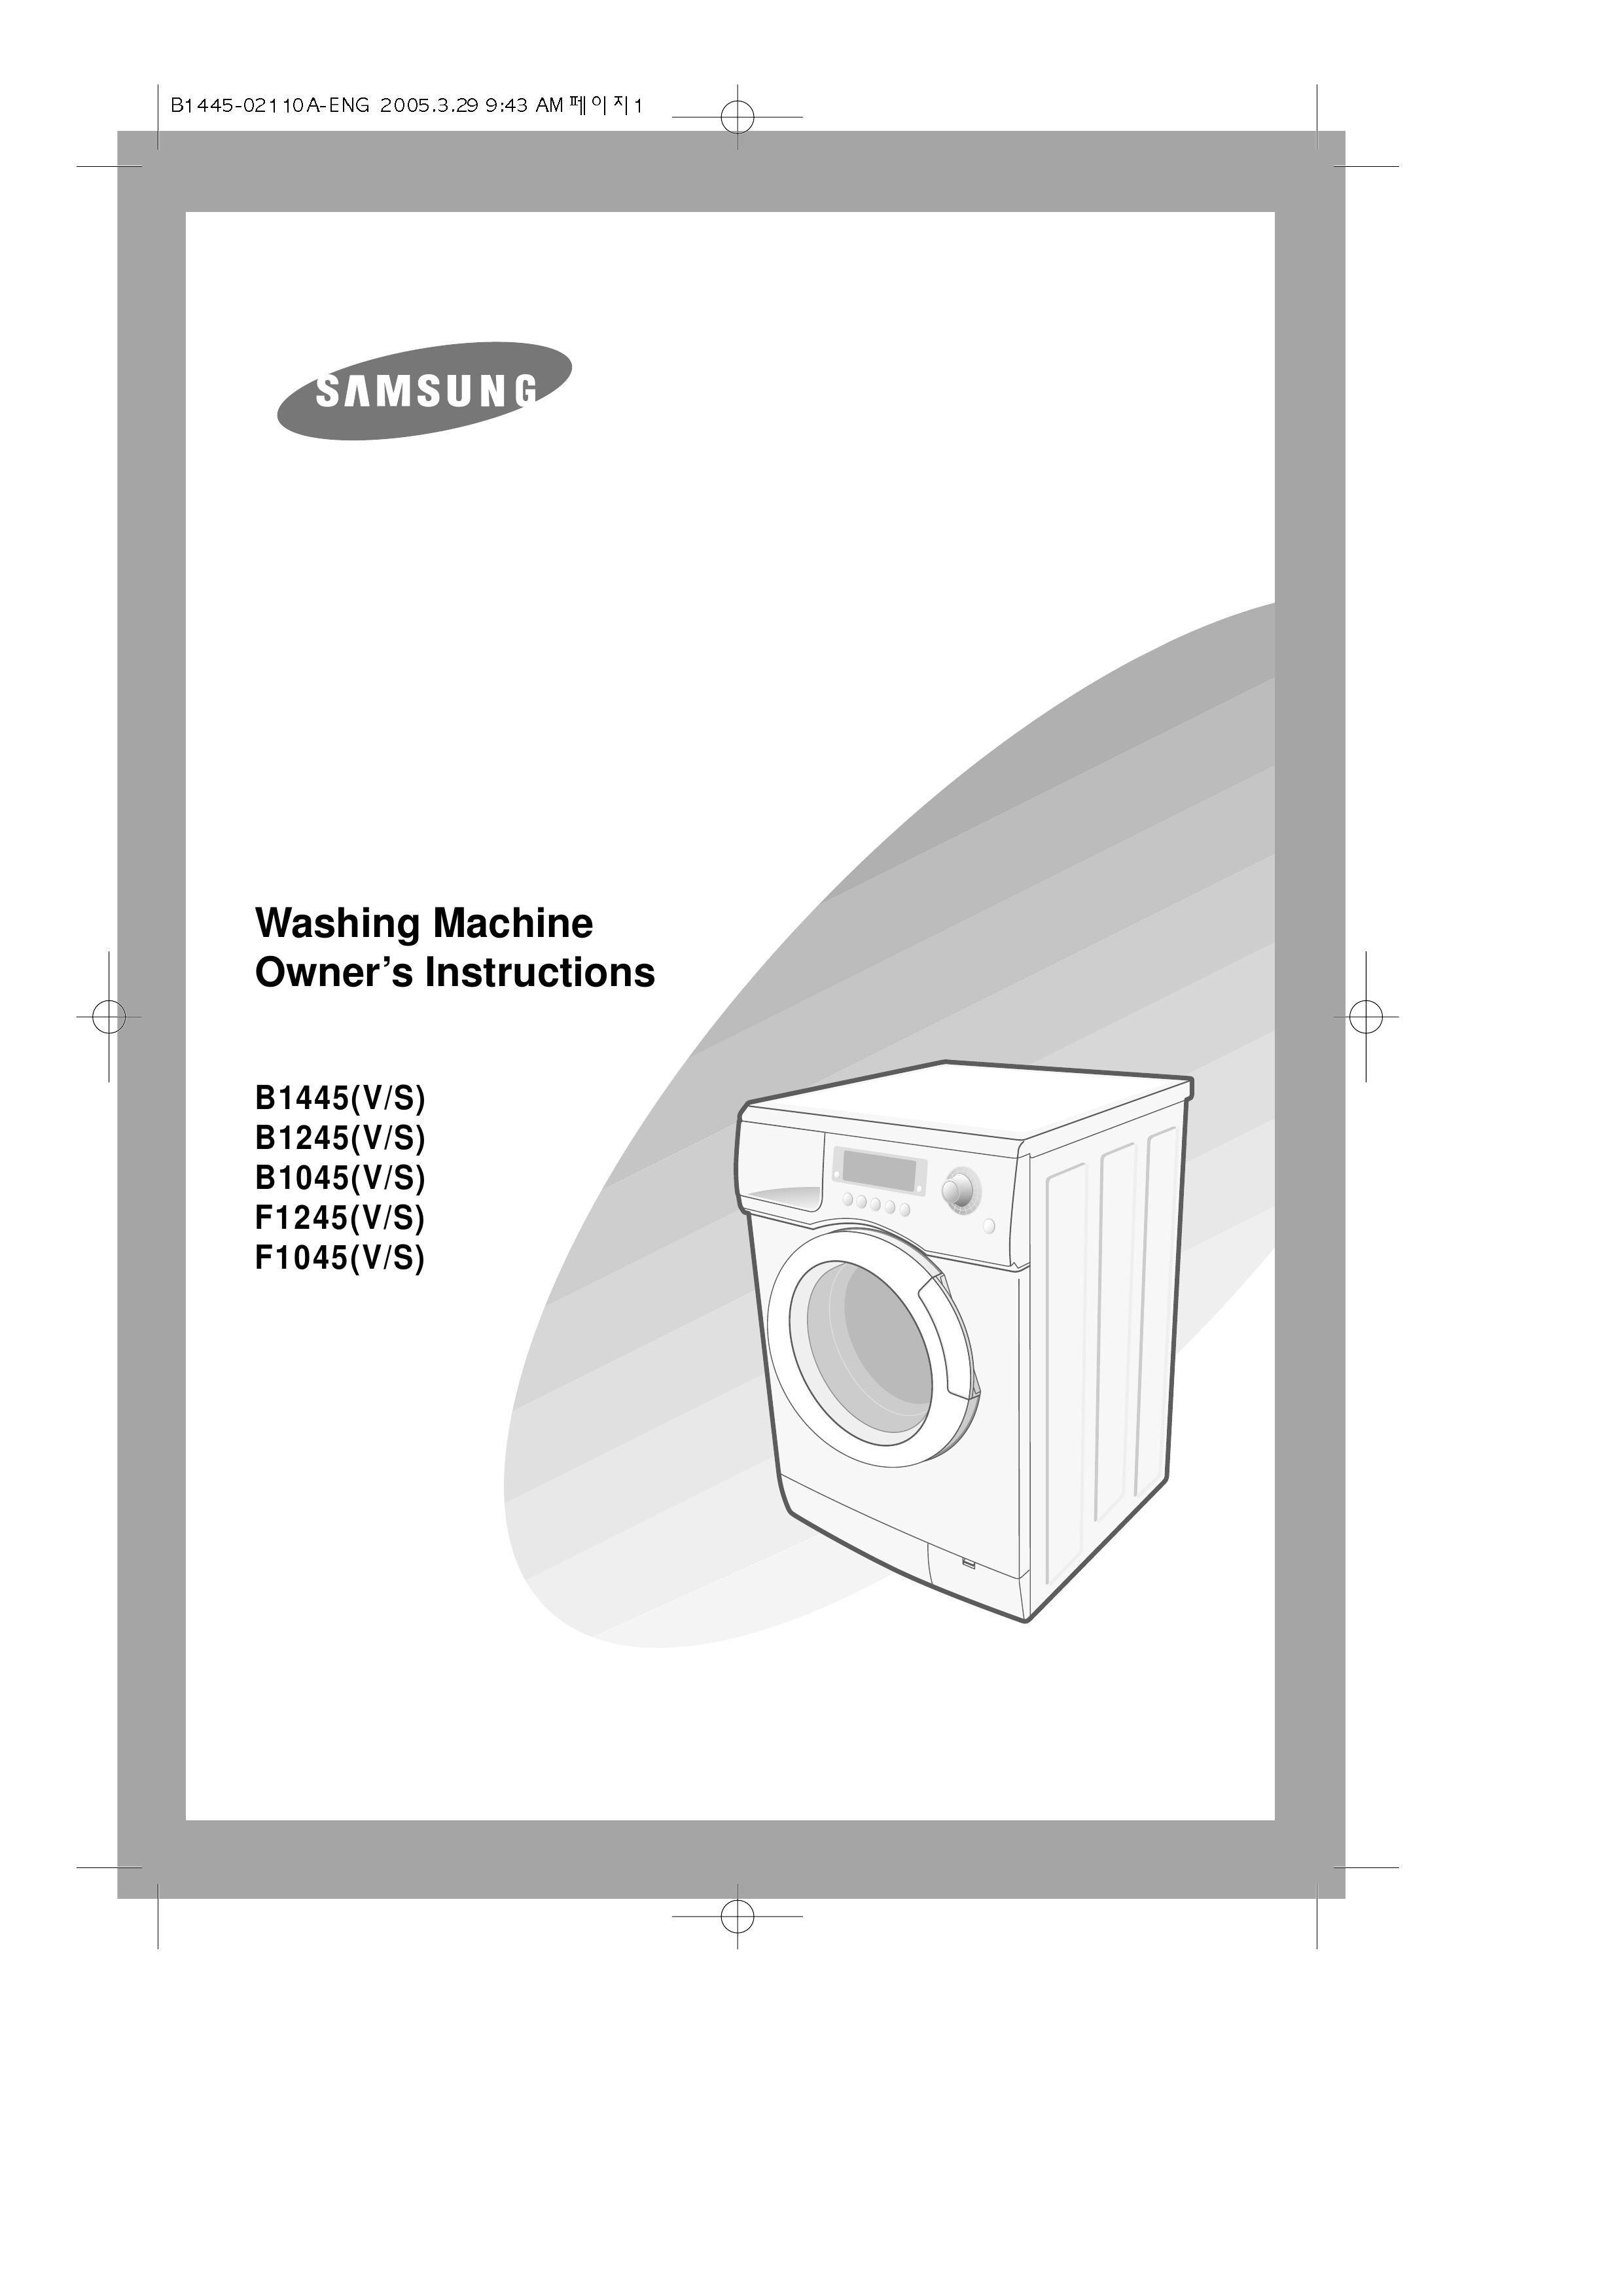 Samsung B1045(V/S) Washer User Manual